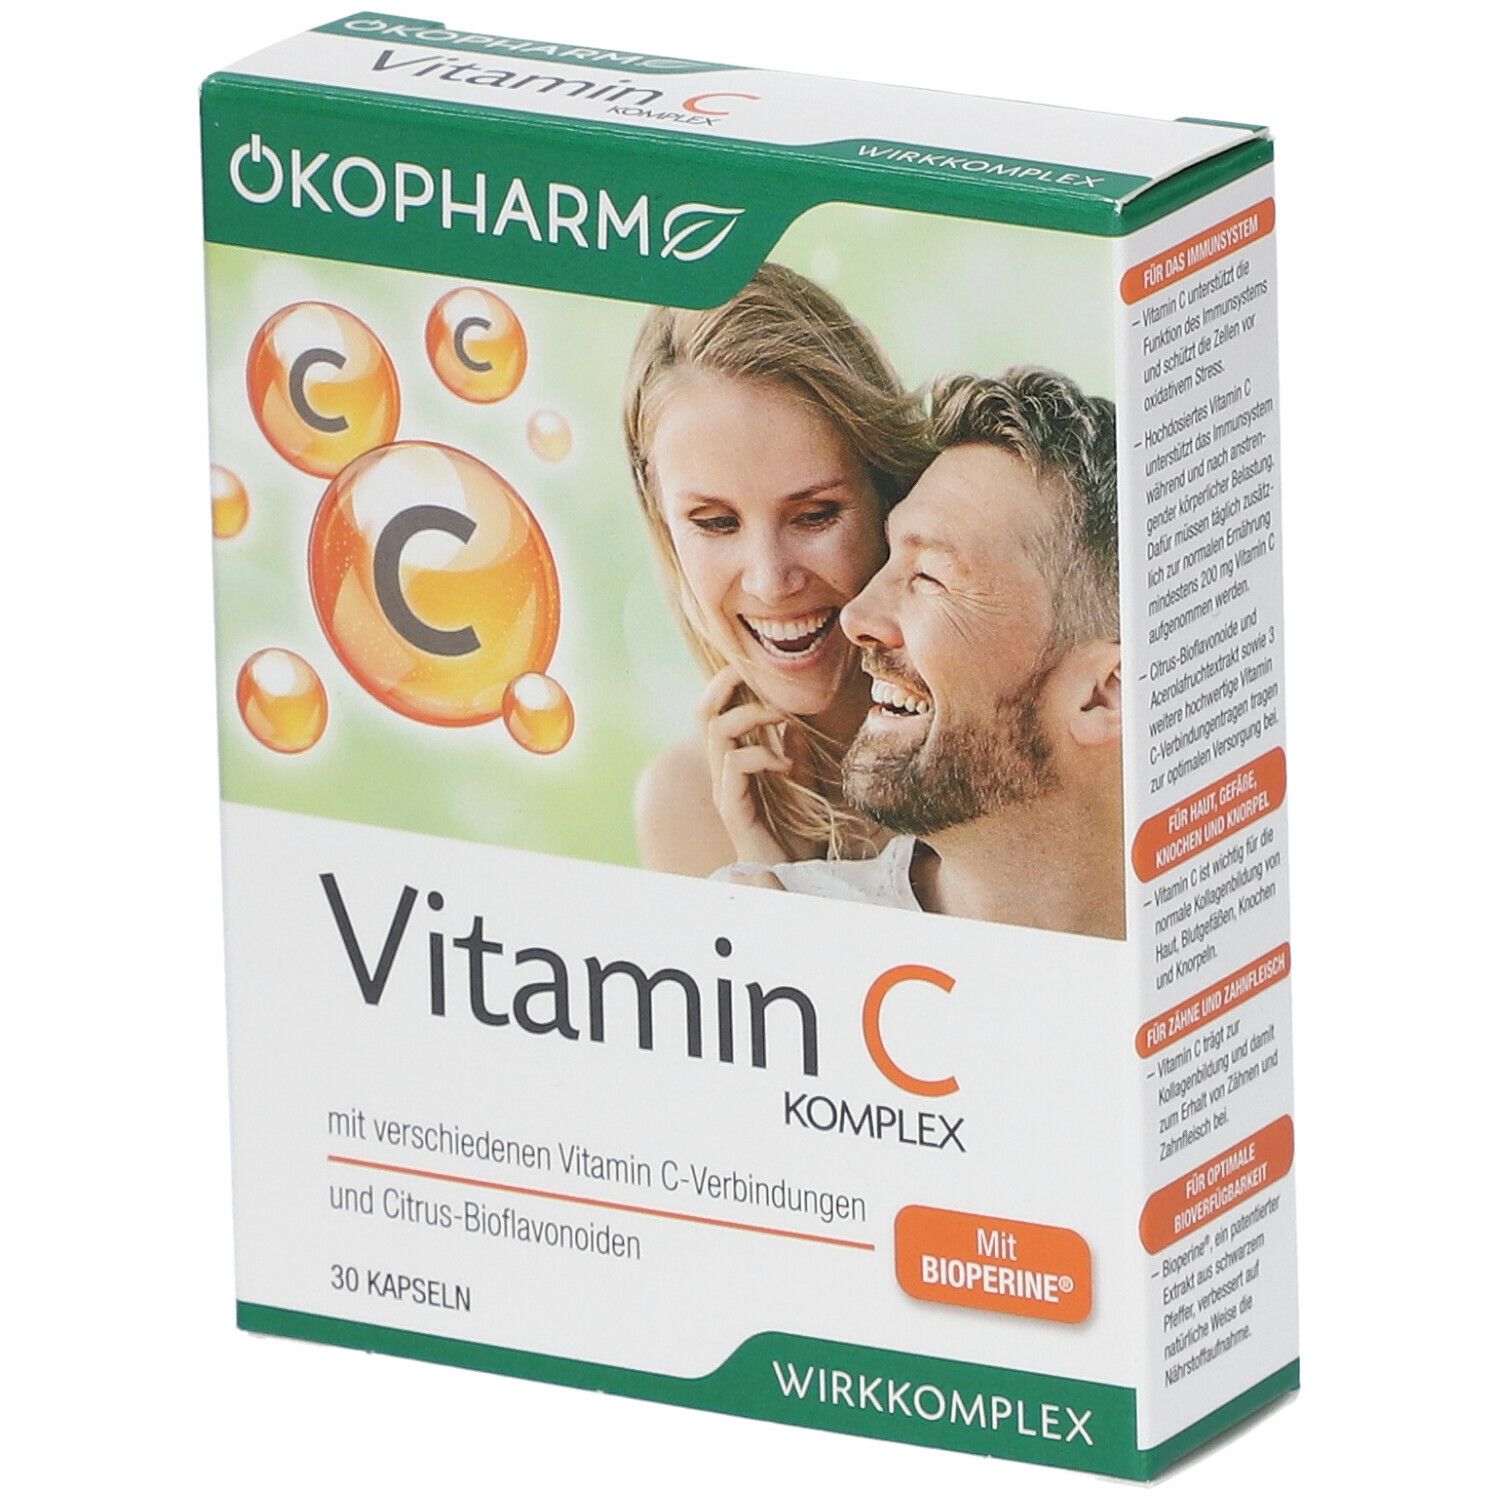 ÖKOPHARM44® VITAMIN C WIRKKOMPLEX